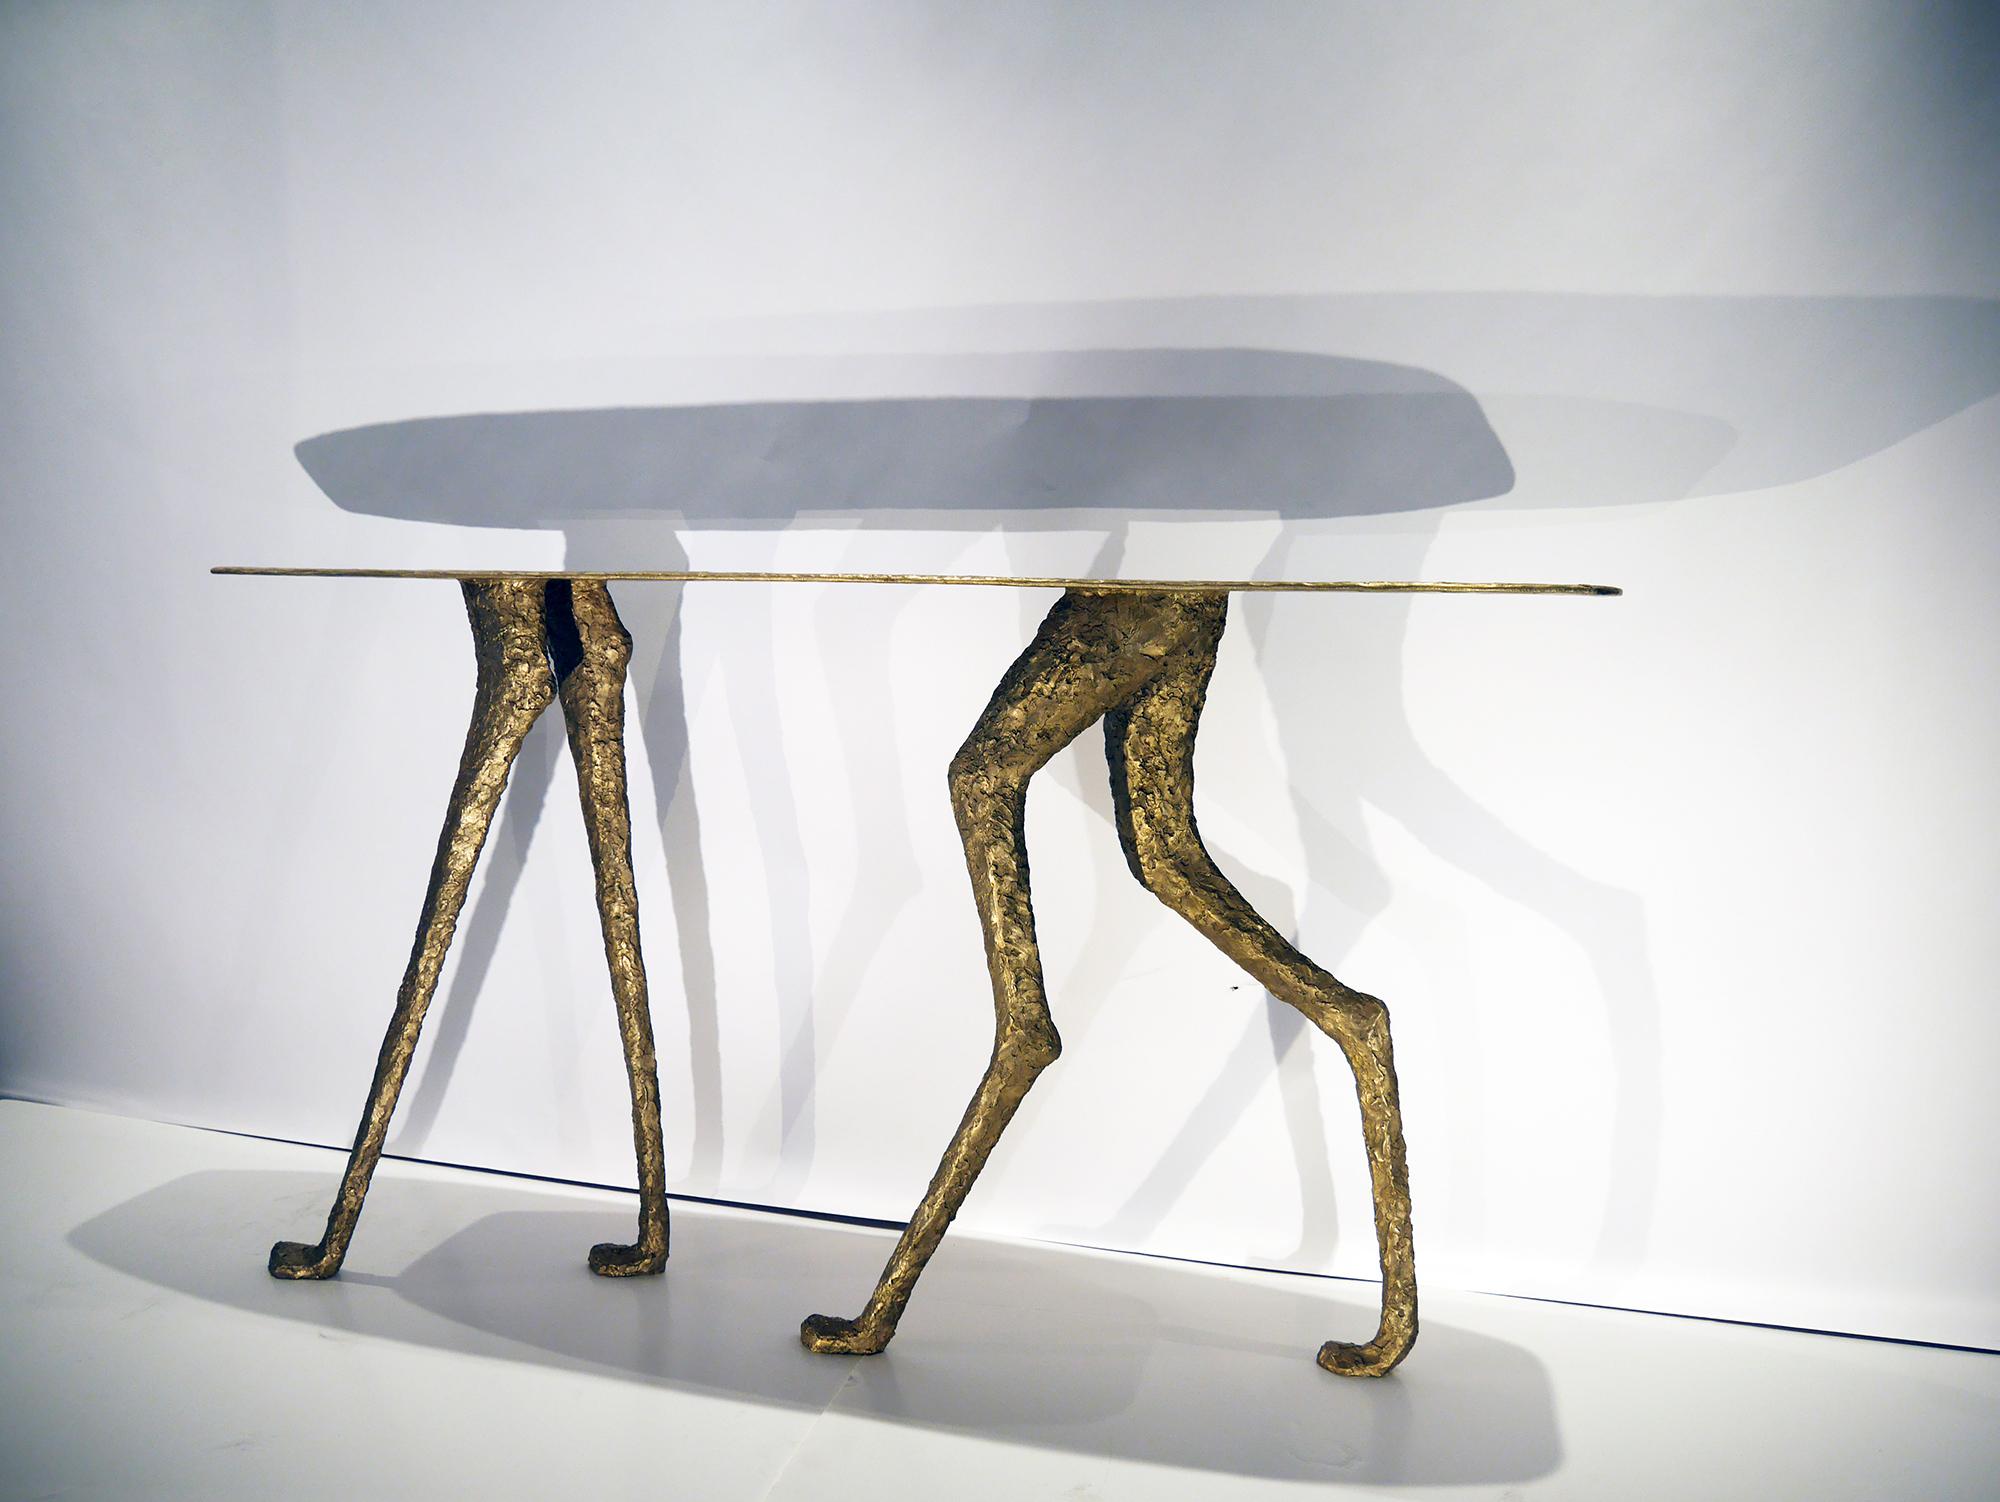 Cadence, limited edition bronze console by artist Sylvie Mangaud, animal legs 2